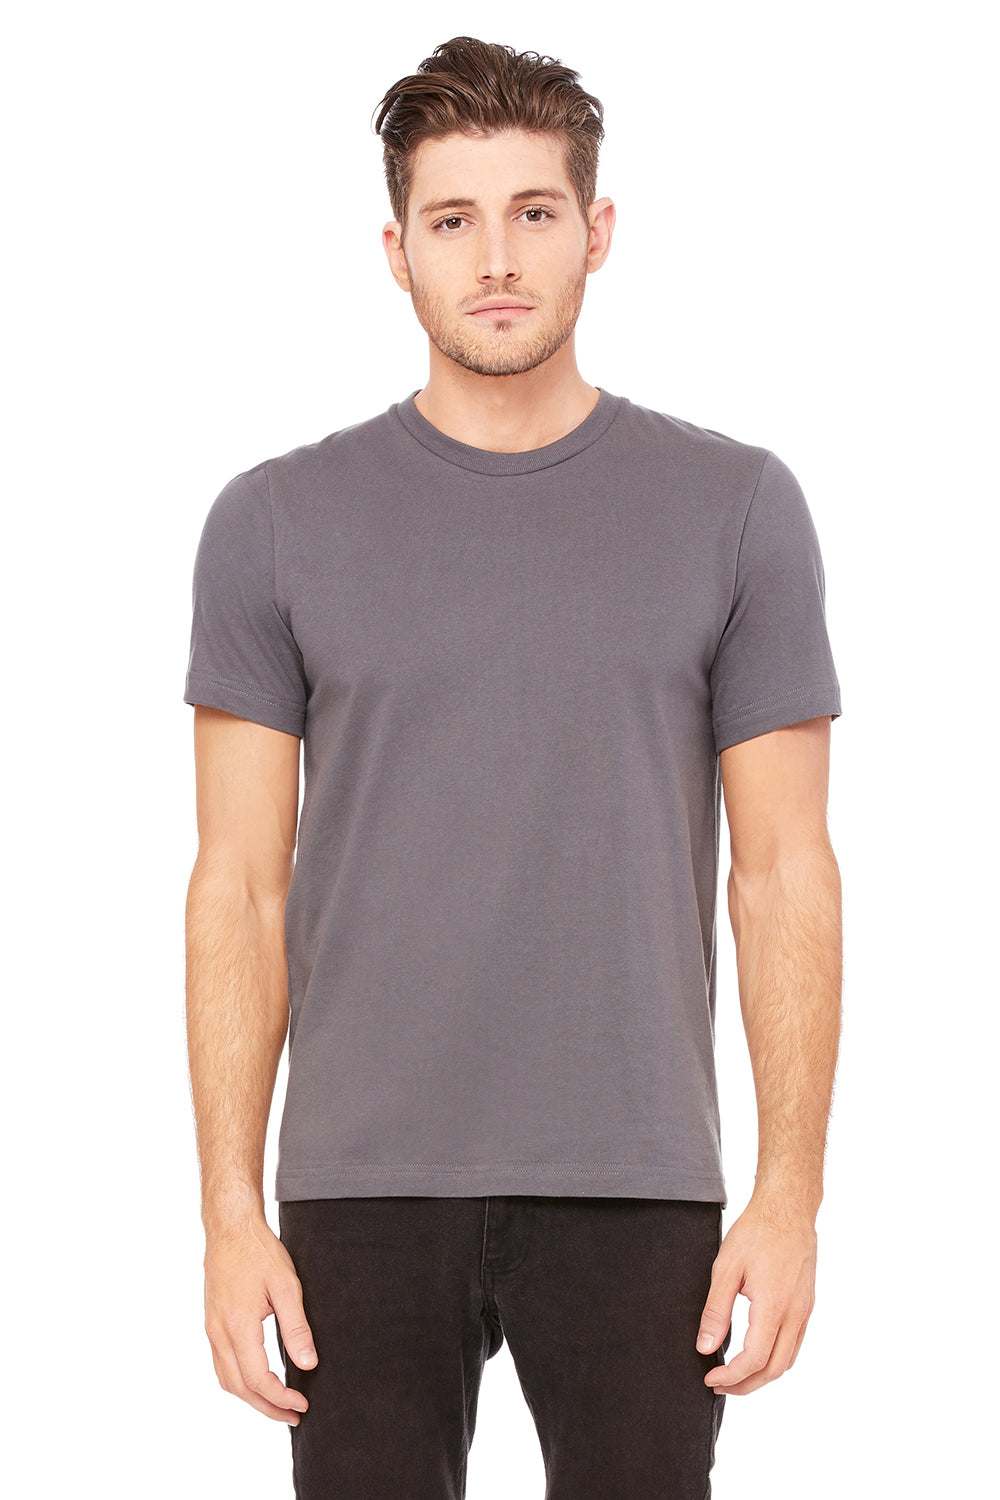 Bella + Canvas 3091 Mens Short Sleeve Crewneck T-Shirt Asphalt Grey Front